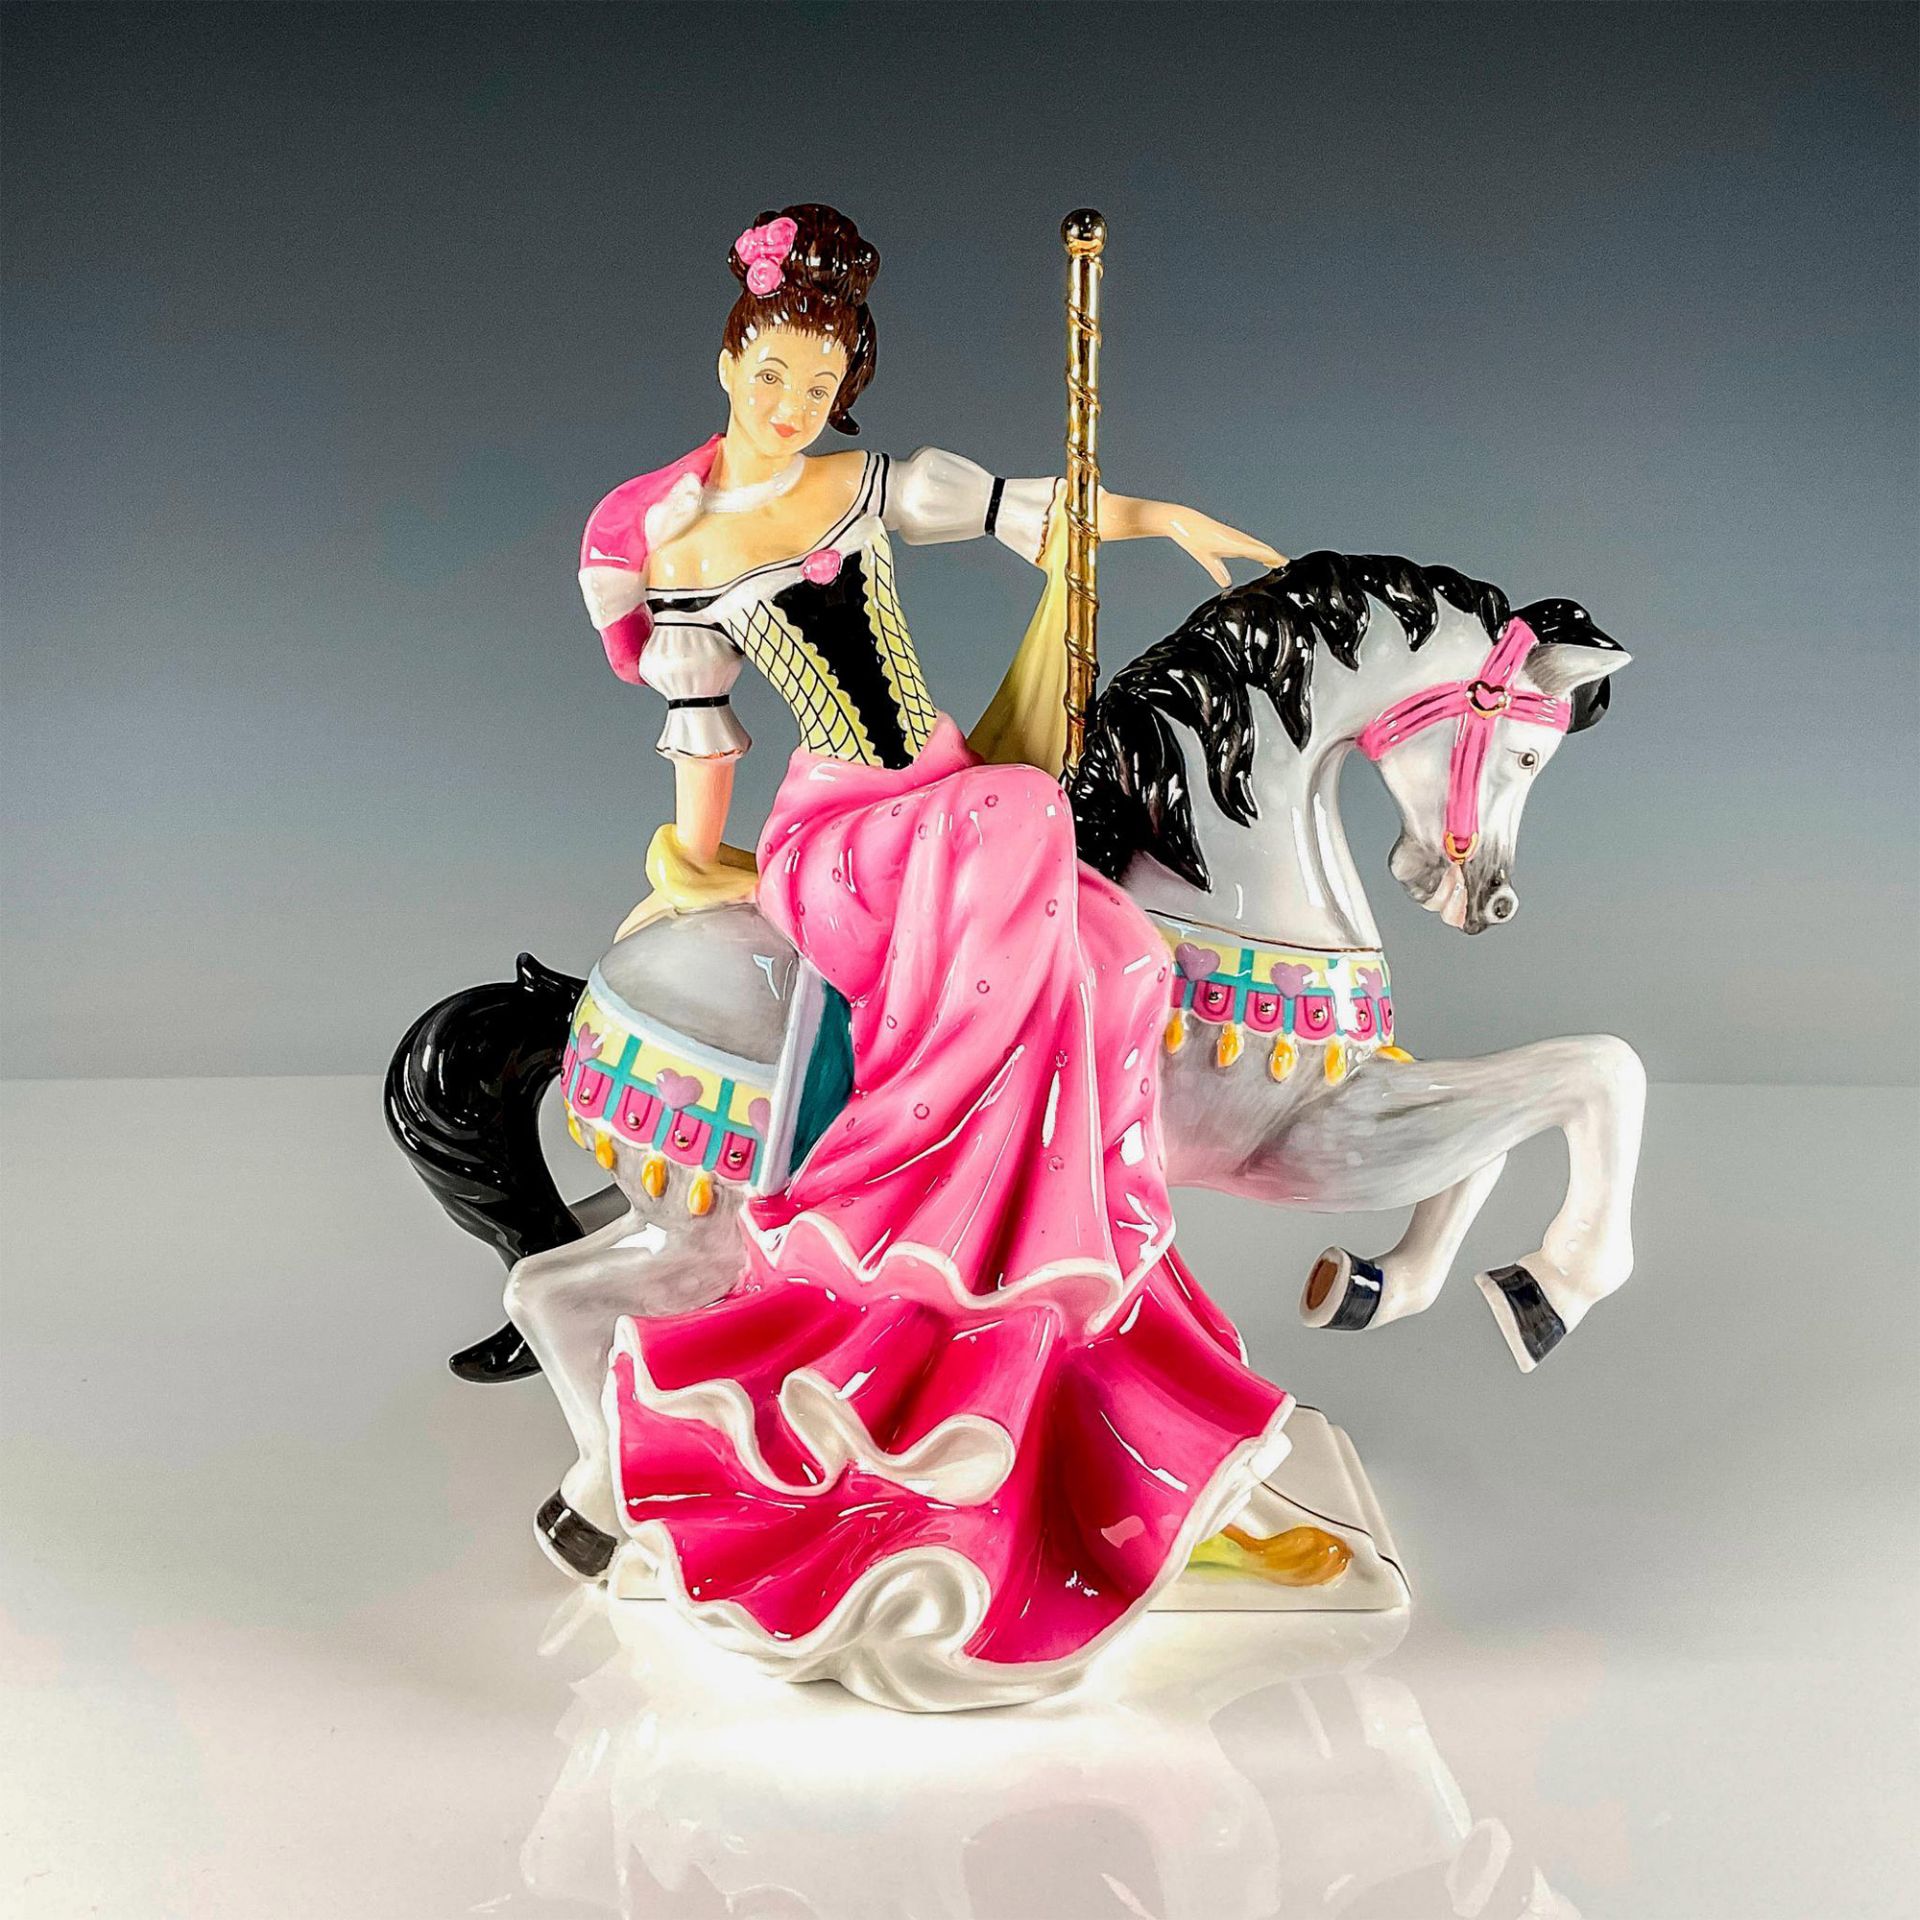 English Ladies Company Figurine, Fairground Attraction